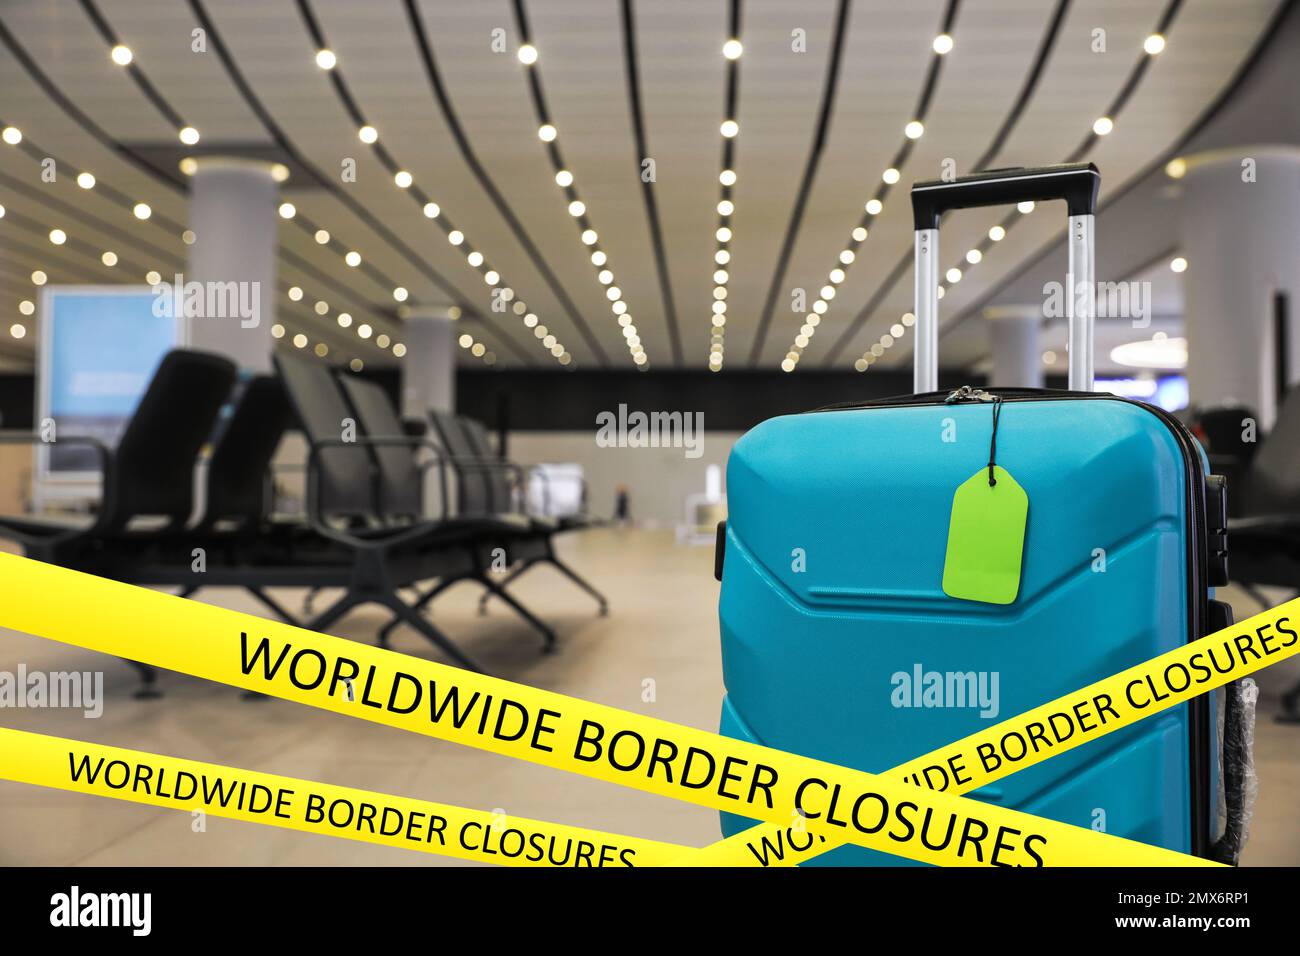 Worldwide border closures through quarantine during coronavirus outbreak. Suitcase in airport and yellow awareness ribbons Stock Photo